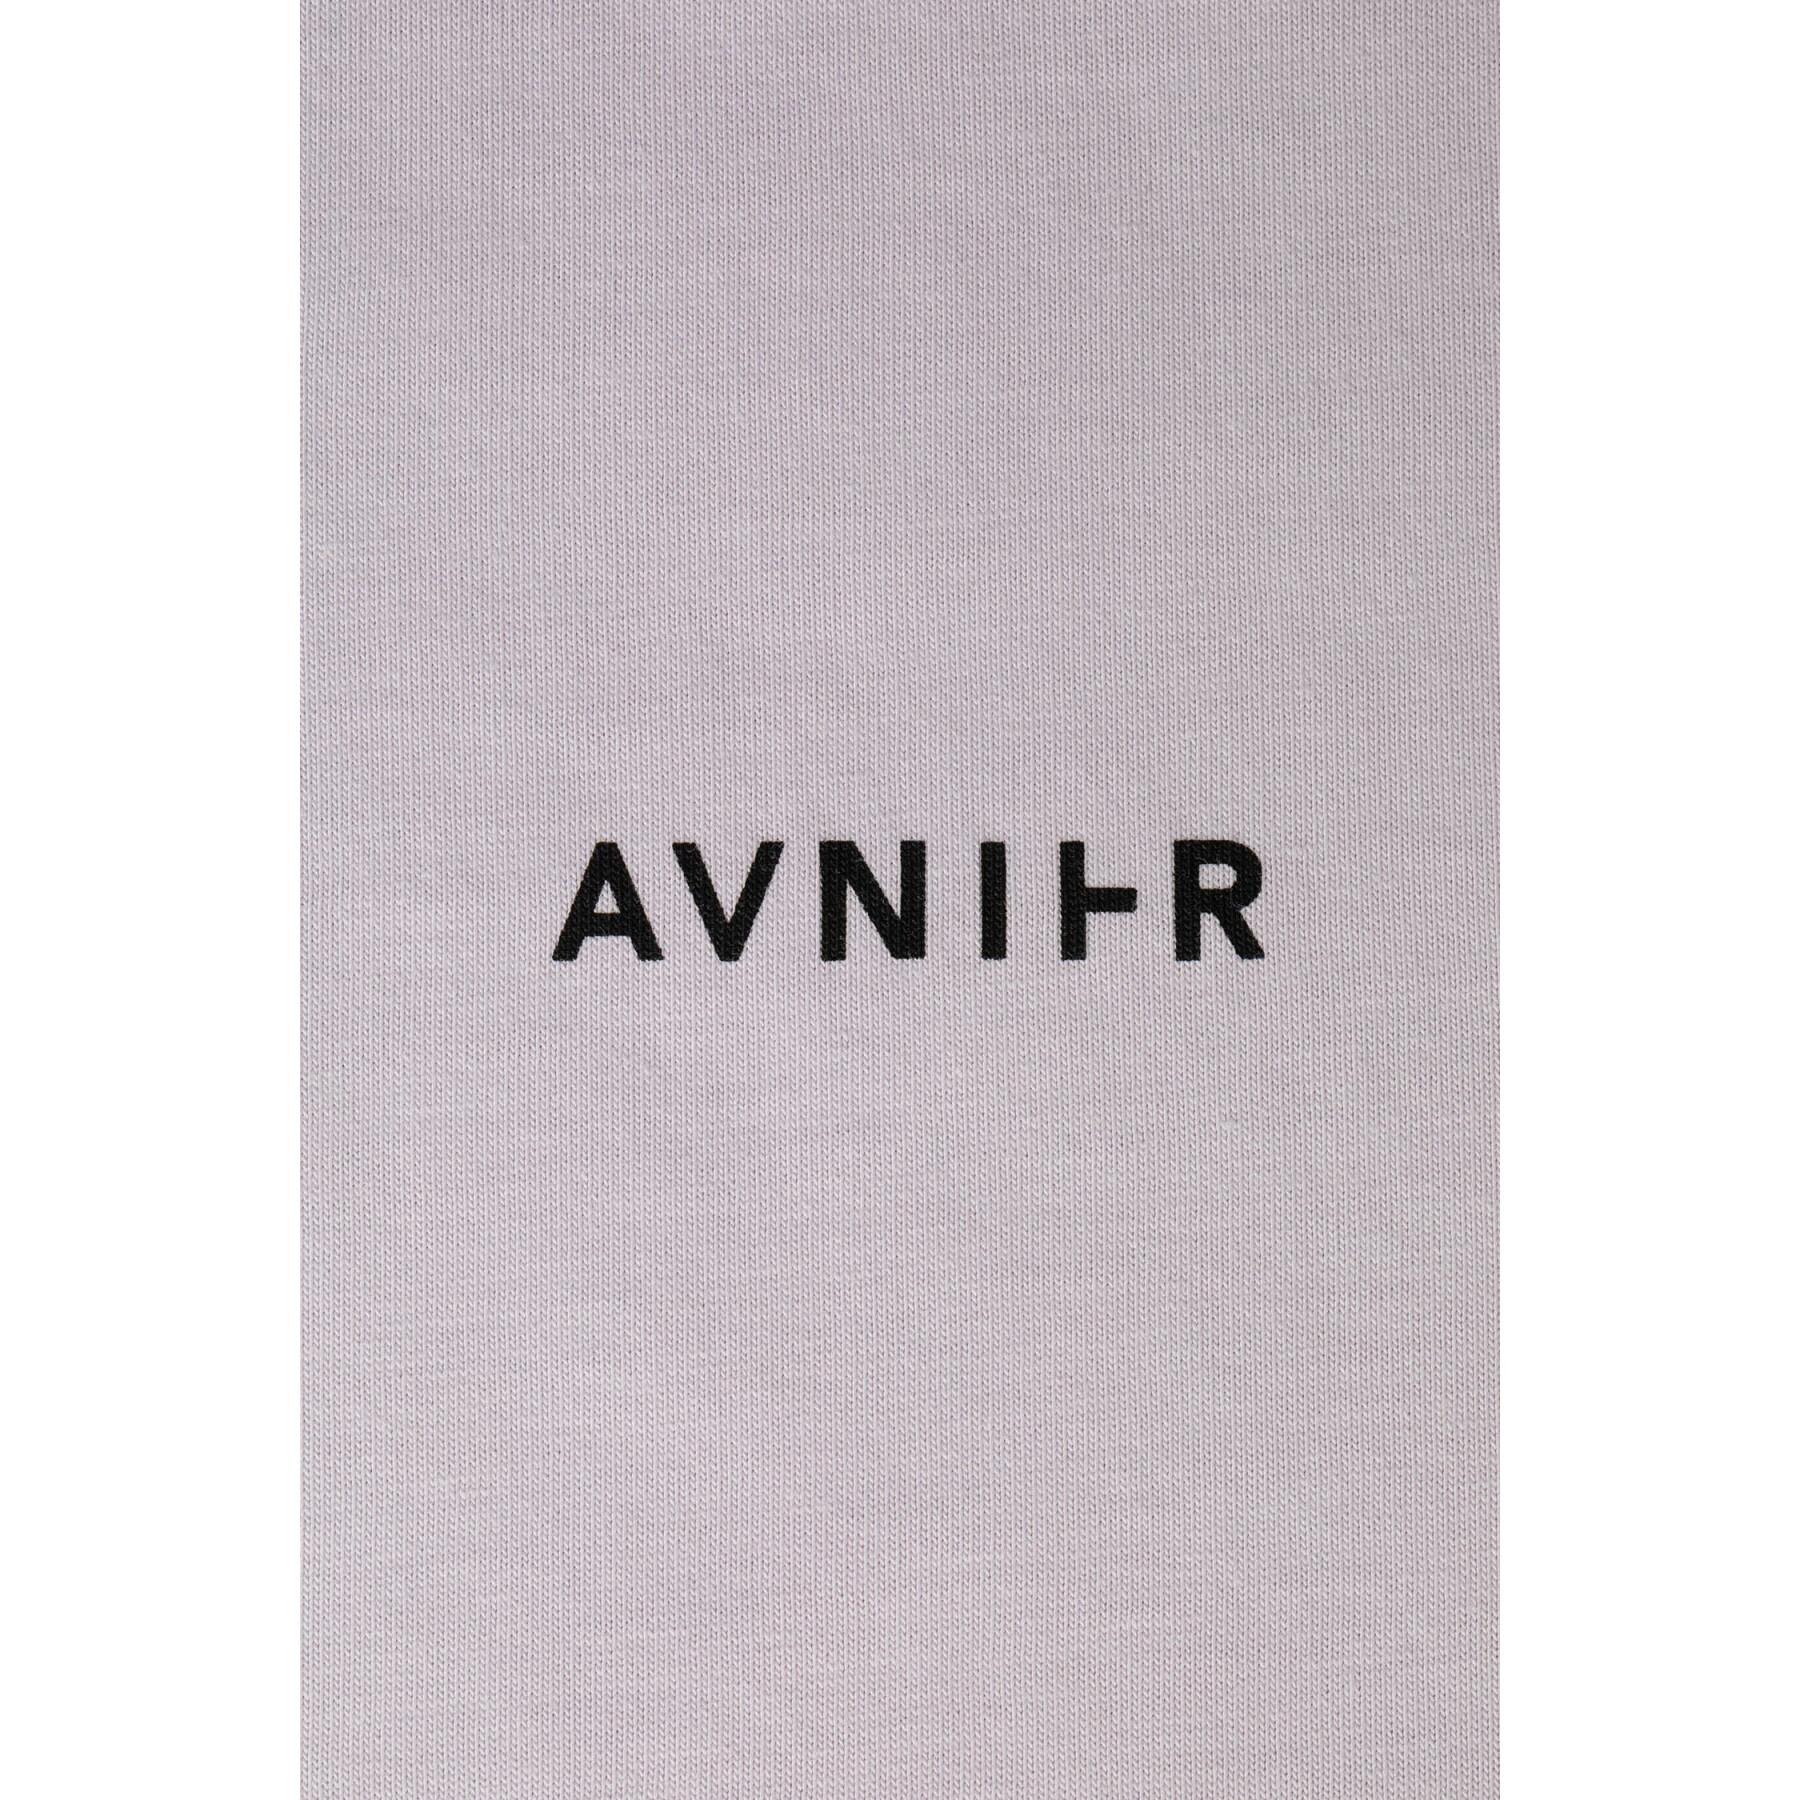 Camiseta Avnier Source Vertical